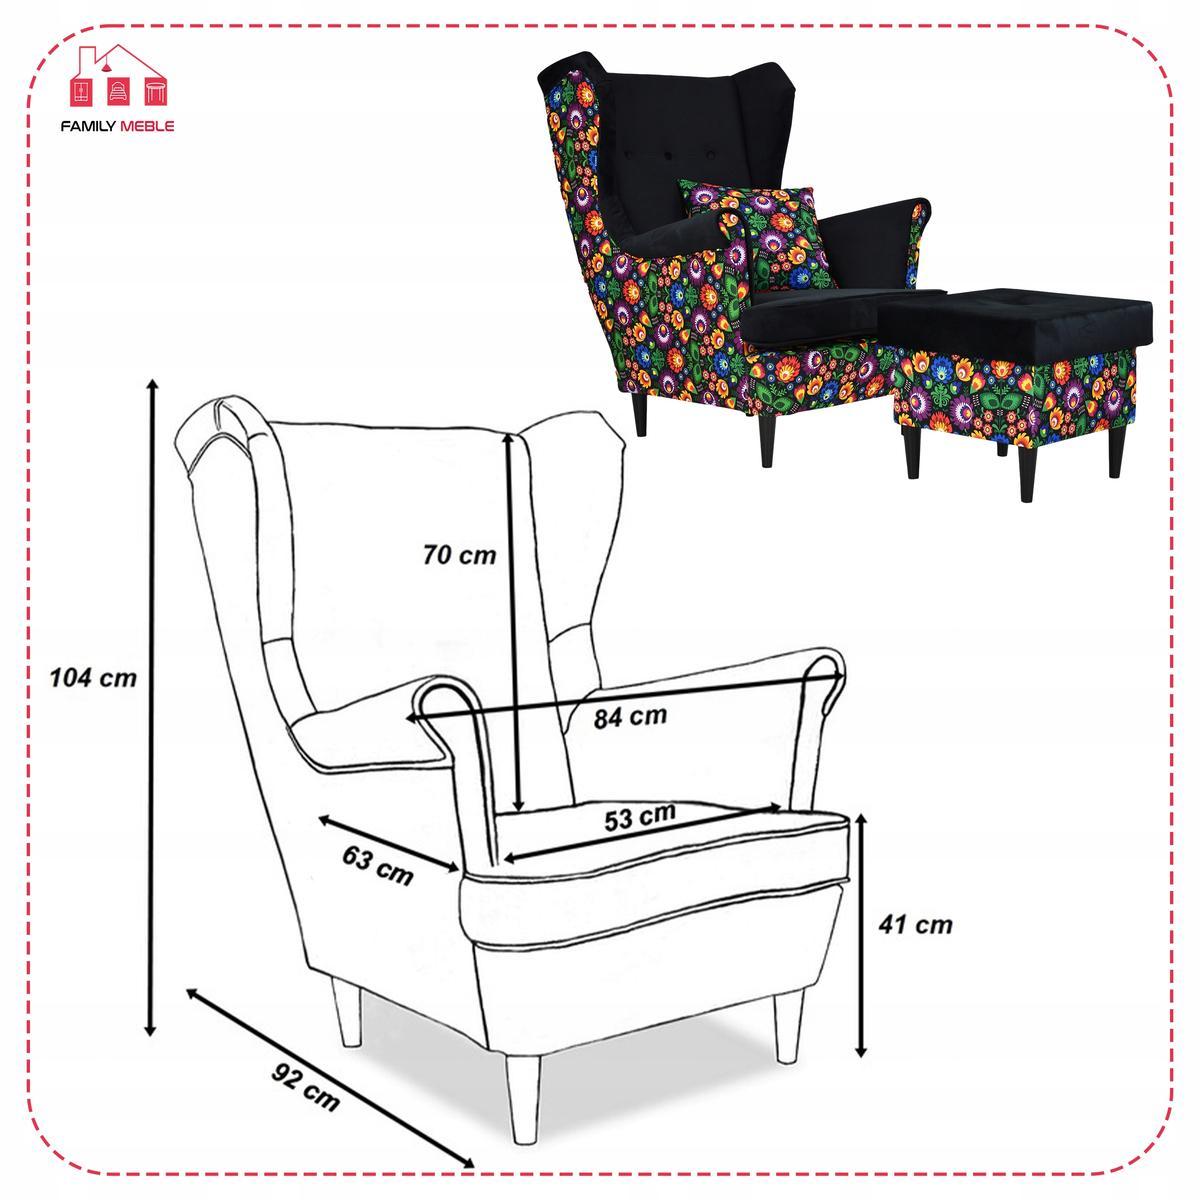 Fotel uszak z podnóżkiem Ari Print Duo FamilyMeble nr. 4